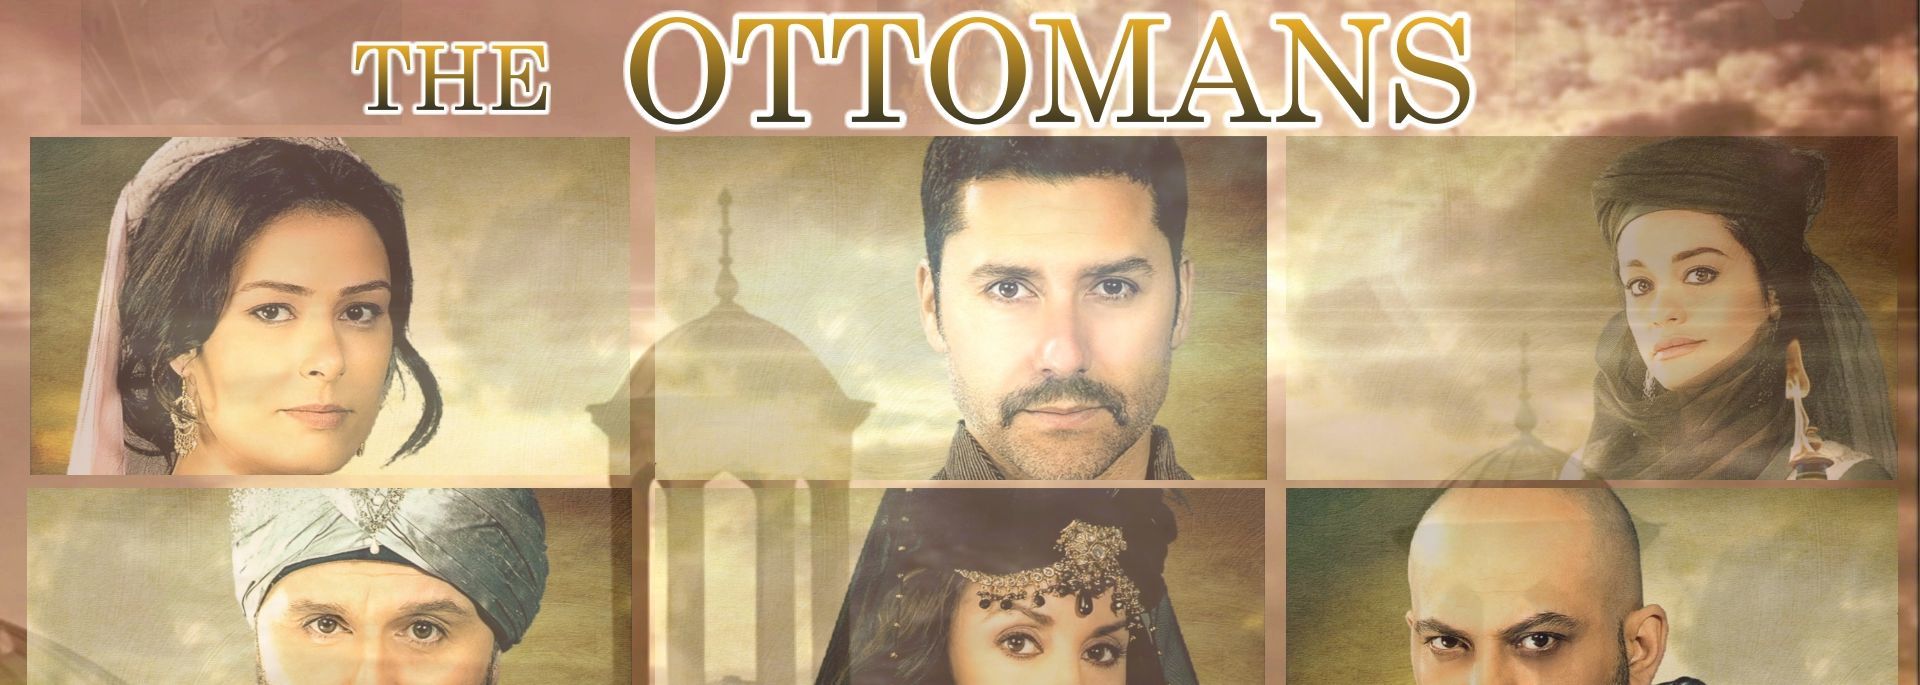 The Ottomans 